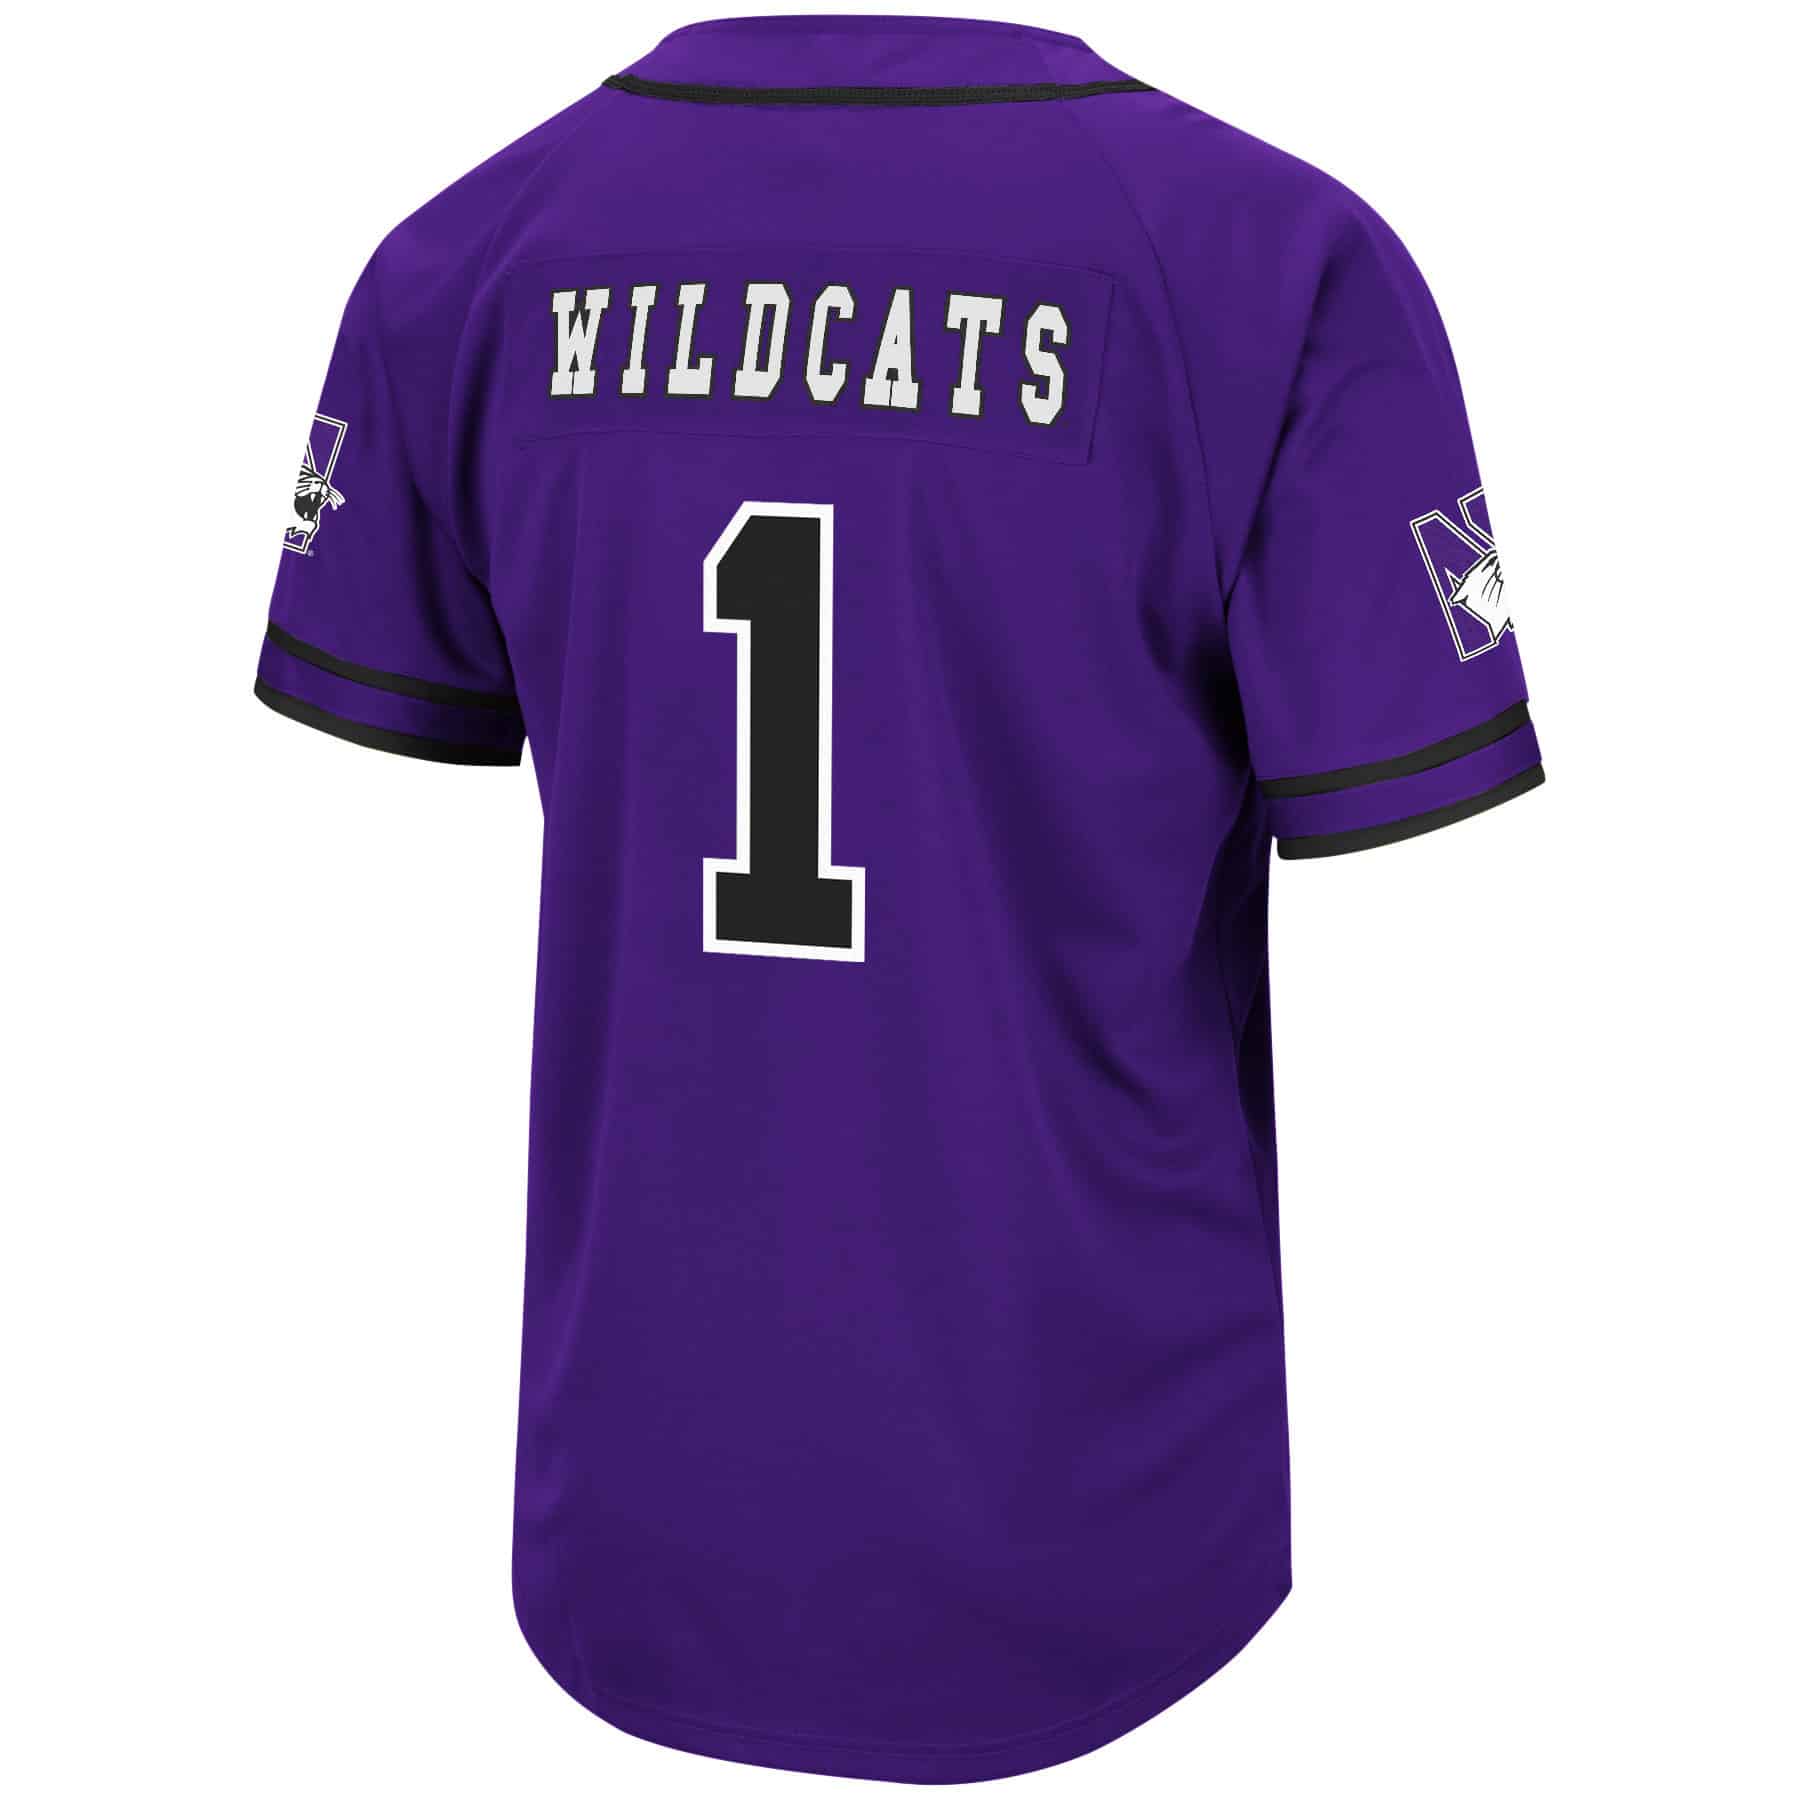 Northwestern University Wildcats Colosseum Men's Purple Turf 'N